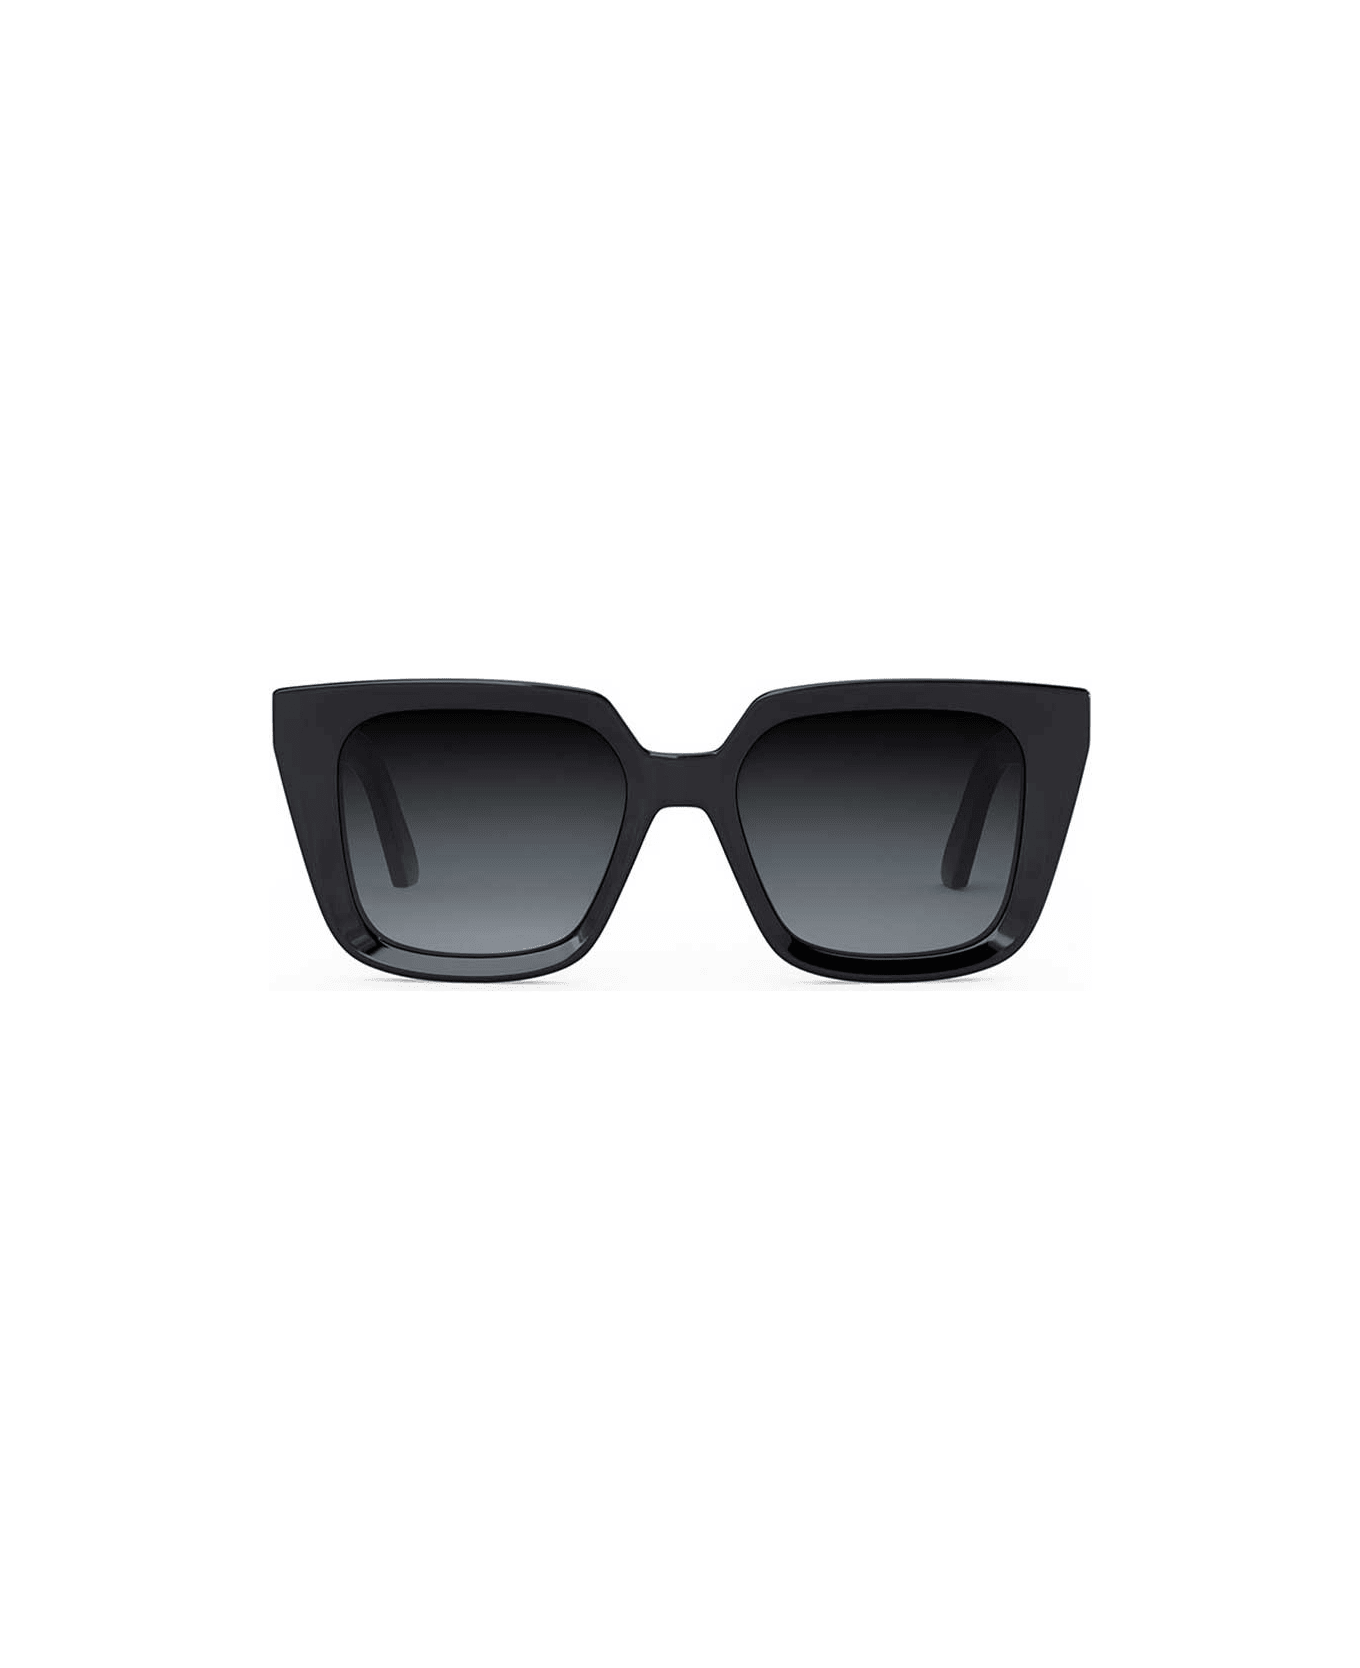 Dior Eyewear Sunglasses - Nero/Rosa sfumato